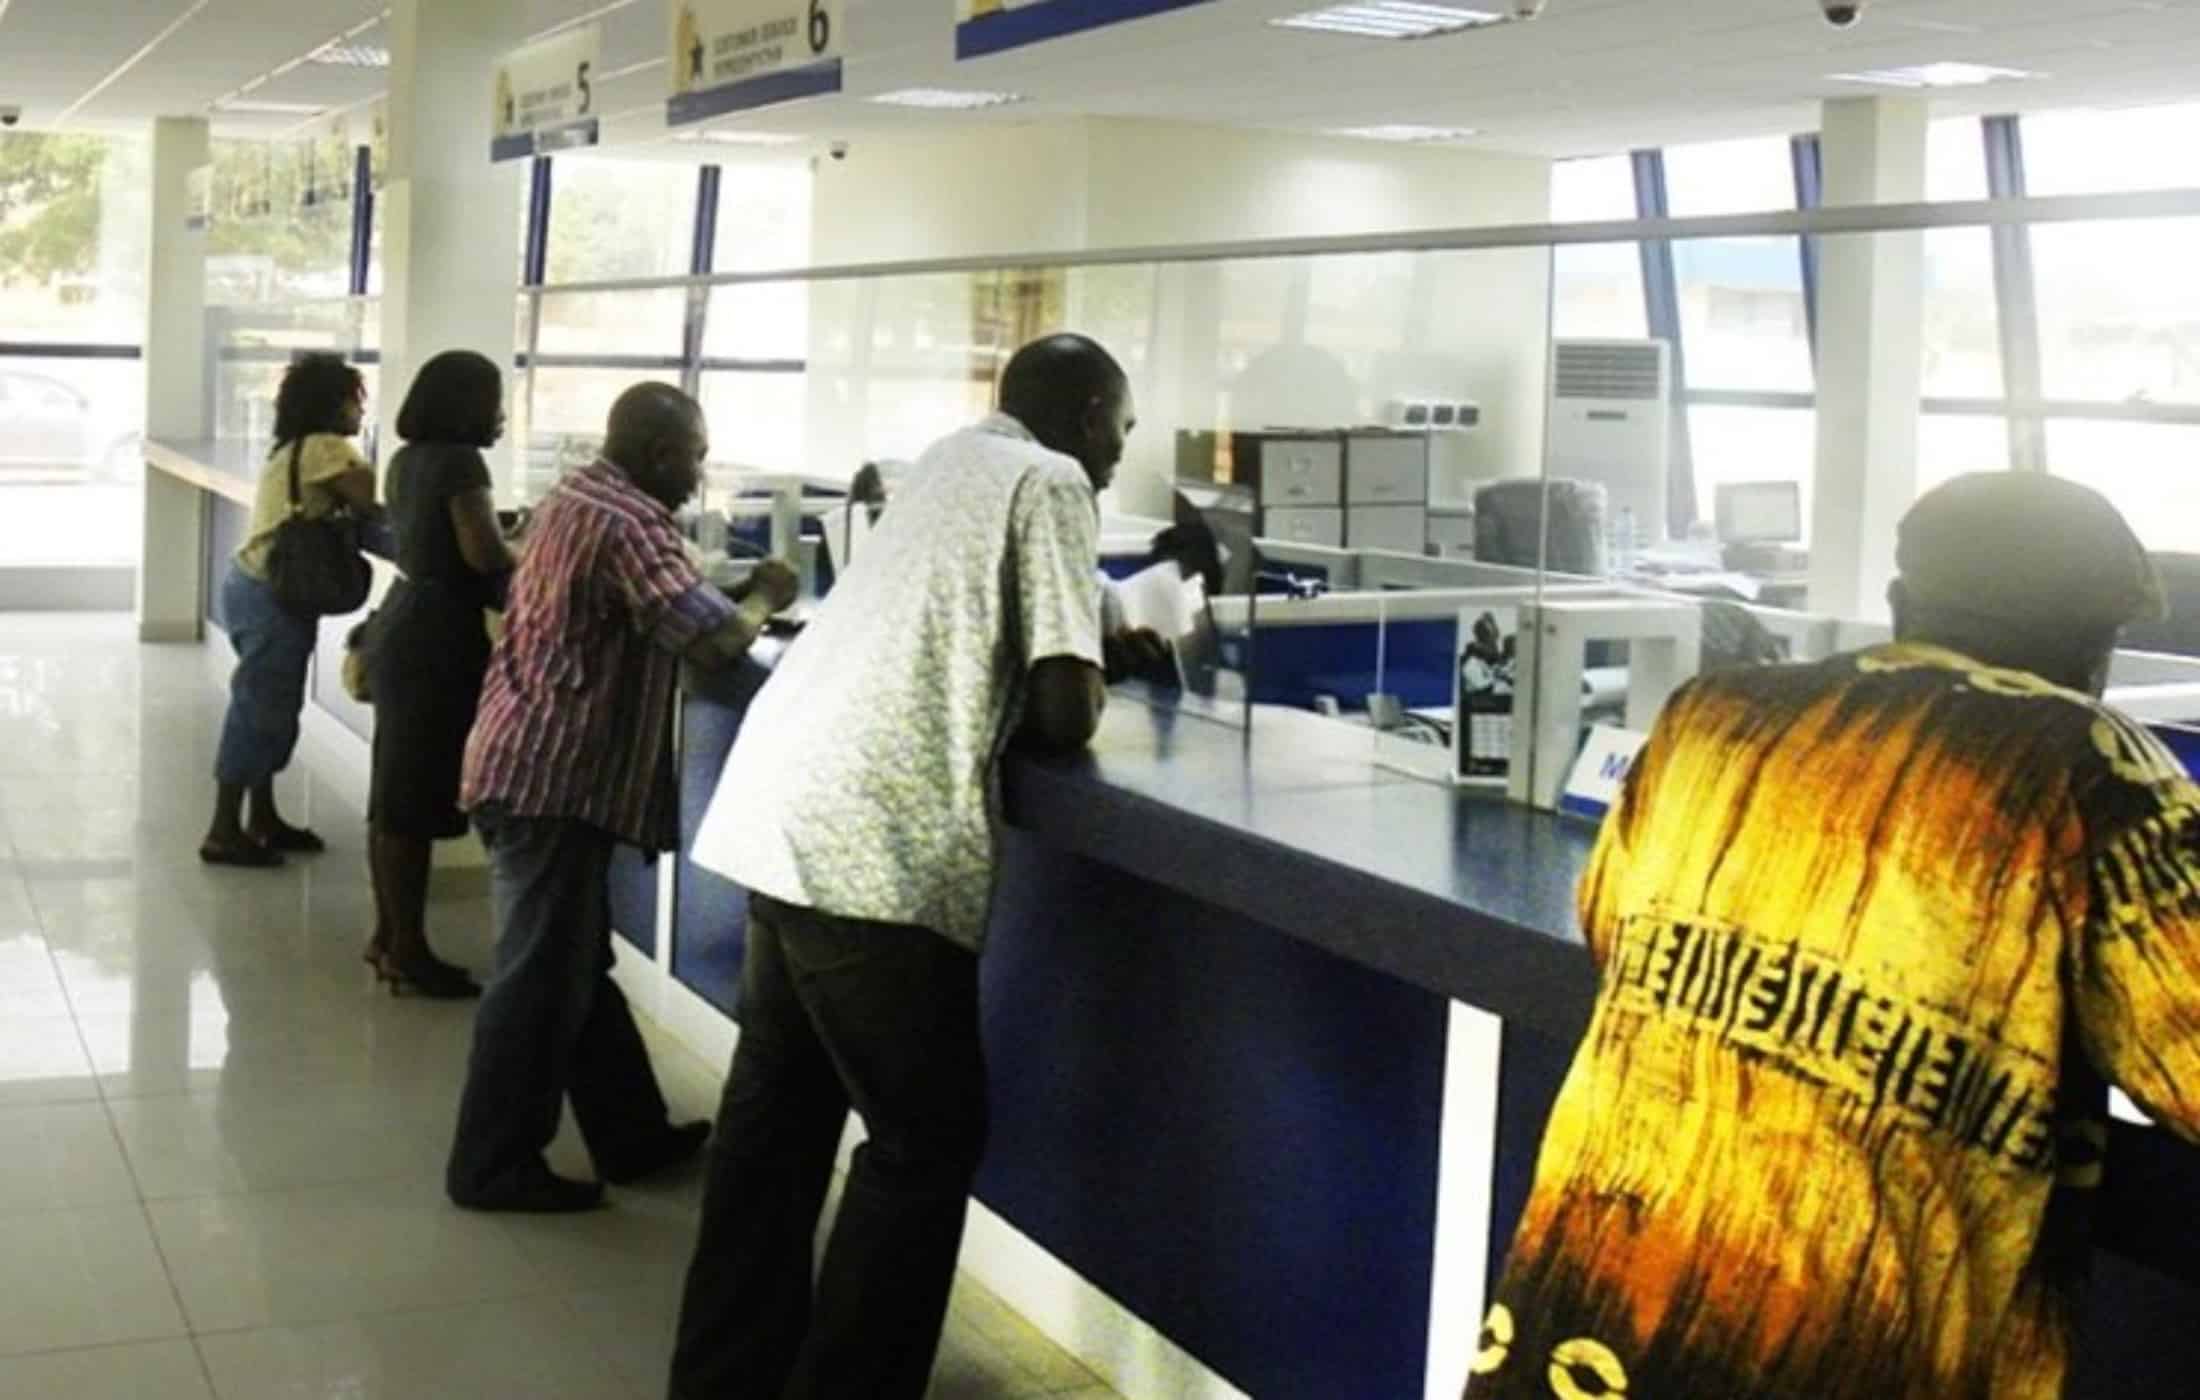 Banks deposits rise by 24% to N42tn - Kemi Filani News